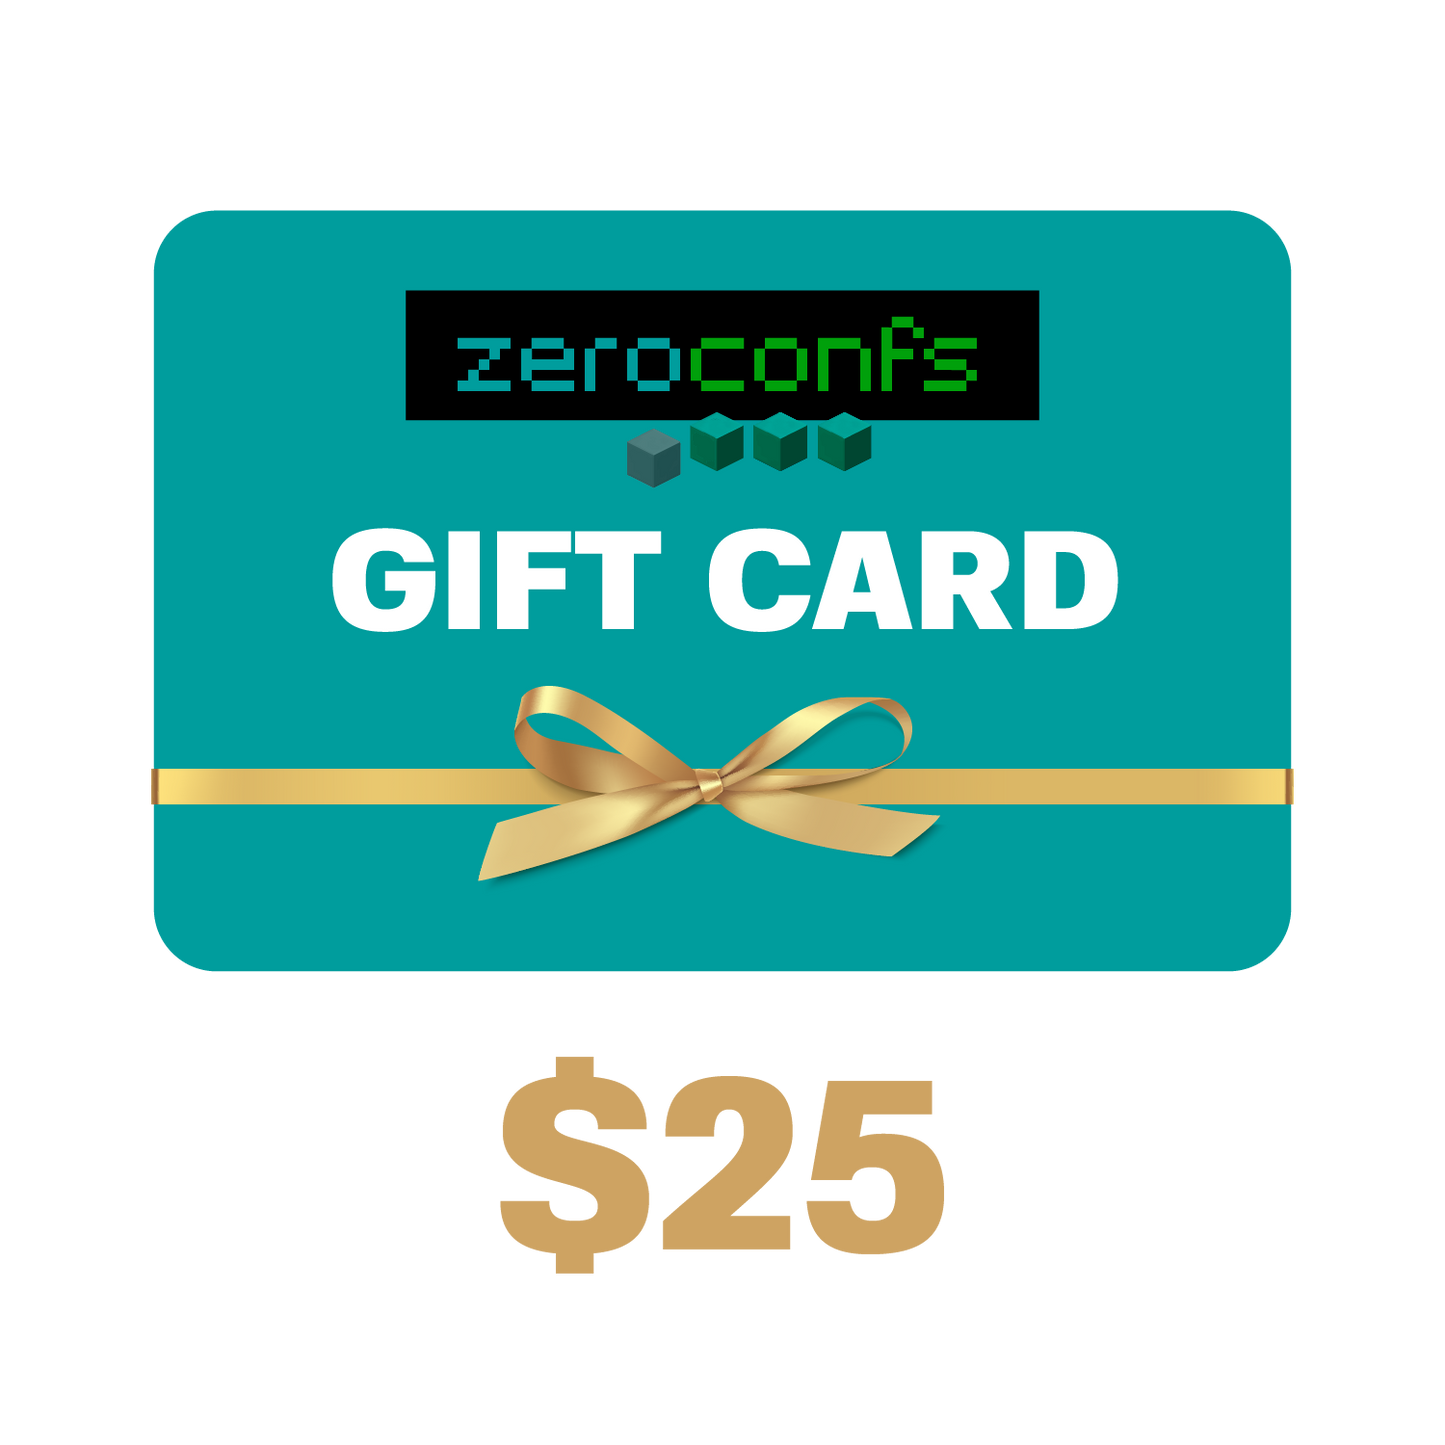 Gift Card Gift Cards zeroconfs $25 USD  